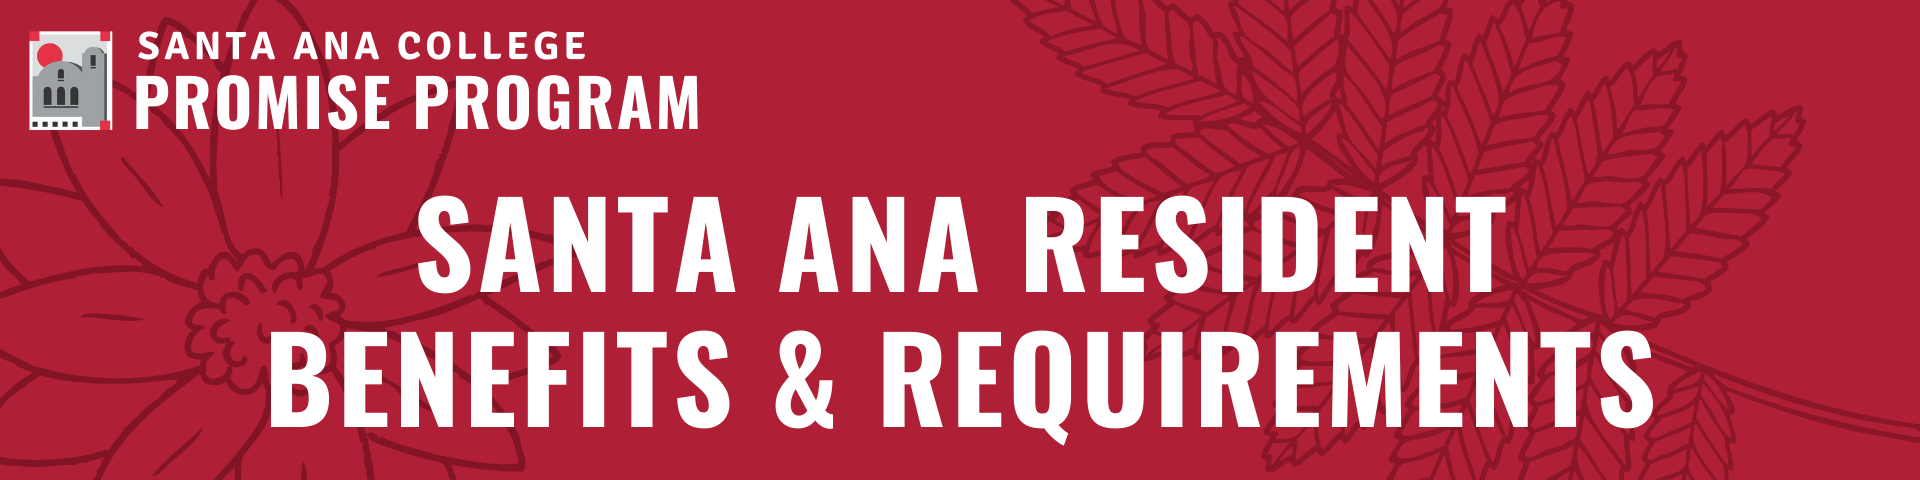 Santa Ana Resident Benefits & Requirements